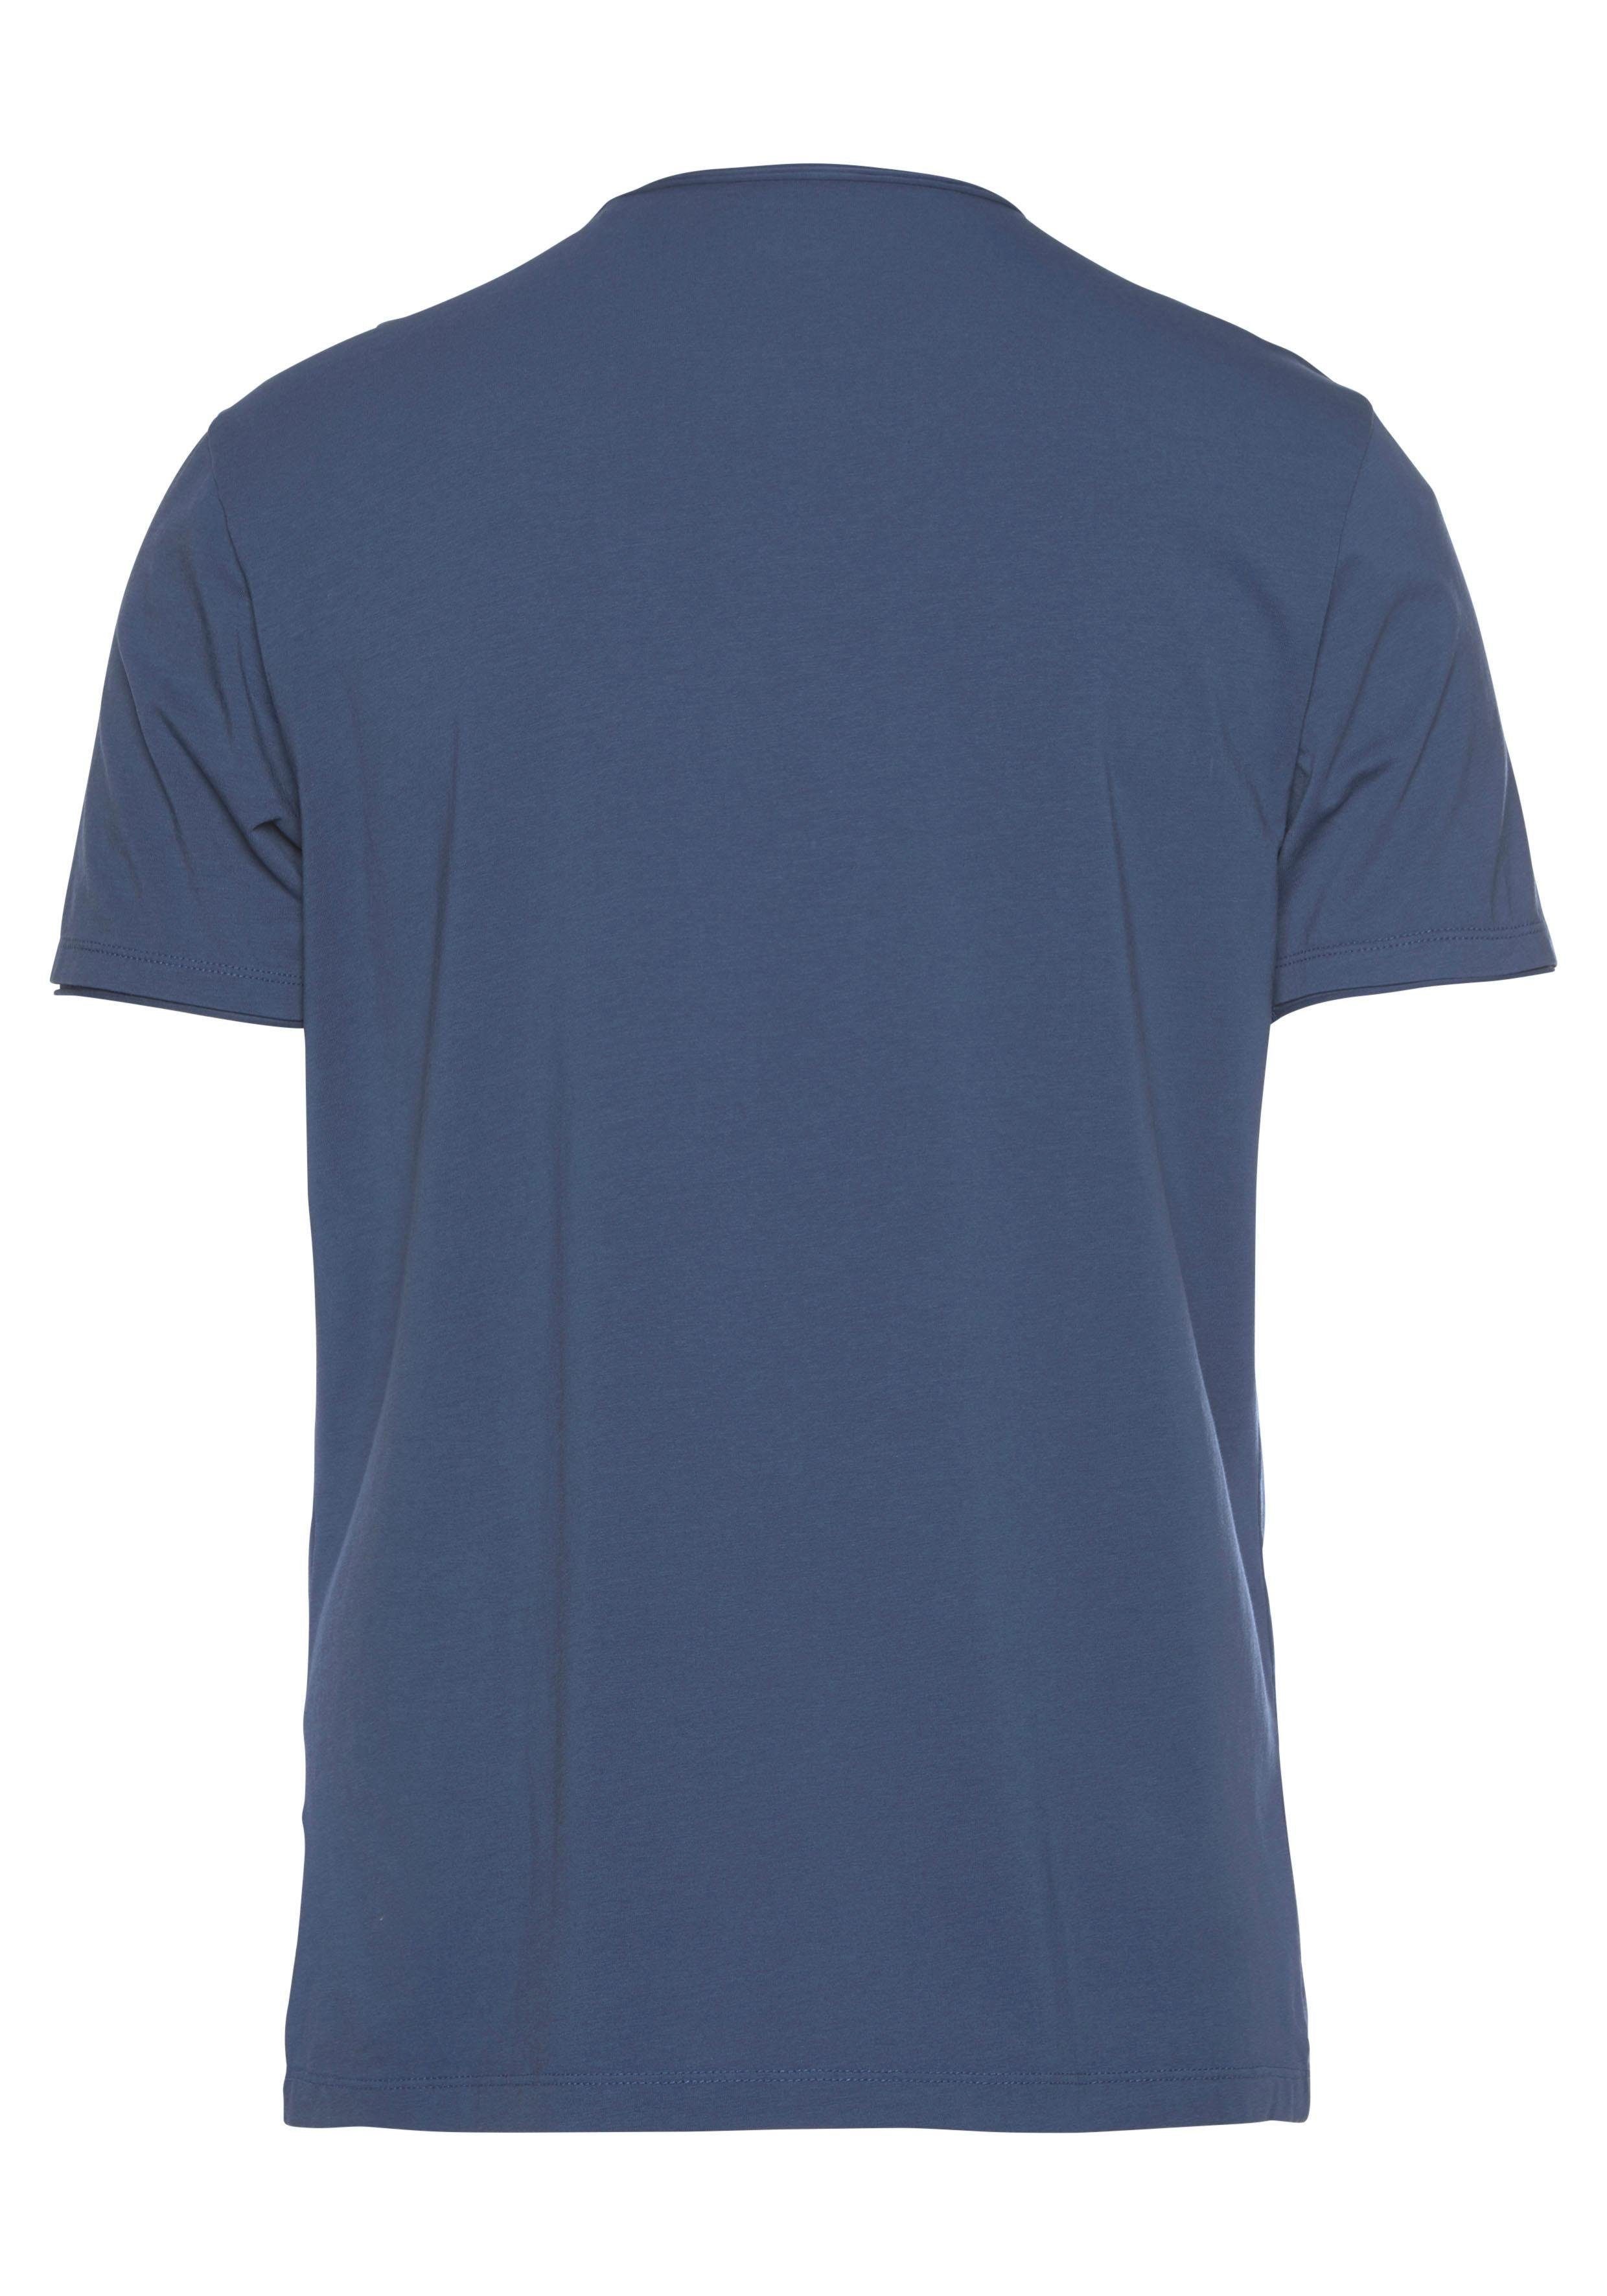 OLYMP T-Shirt Five body Jersey aus feinem indigo fit Level